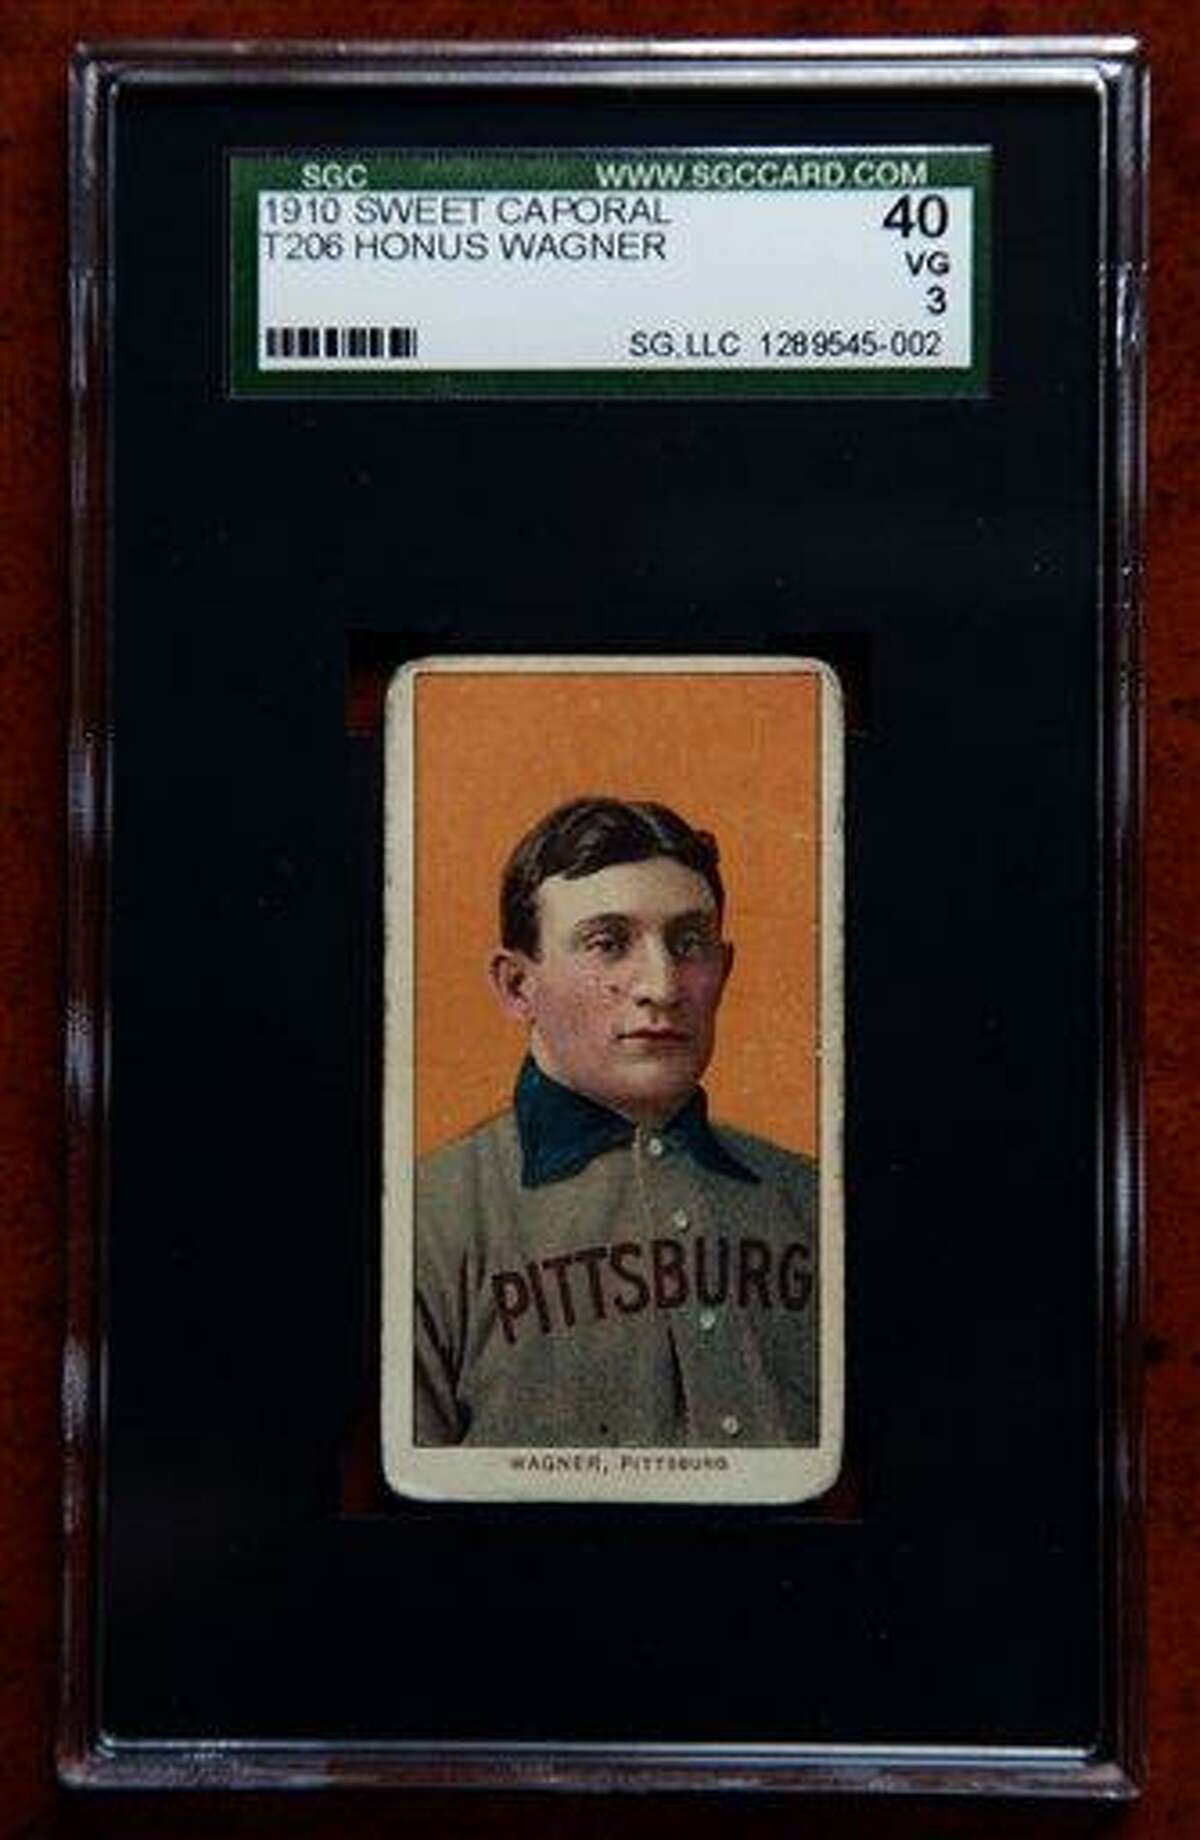 Rare baseball card sells for $1.2M at auction